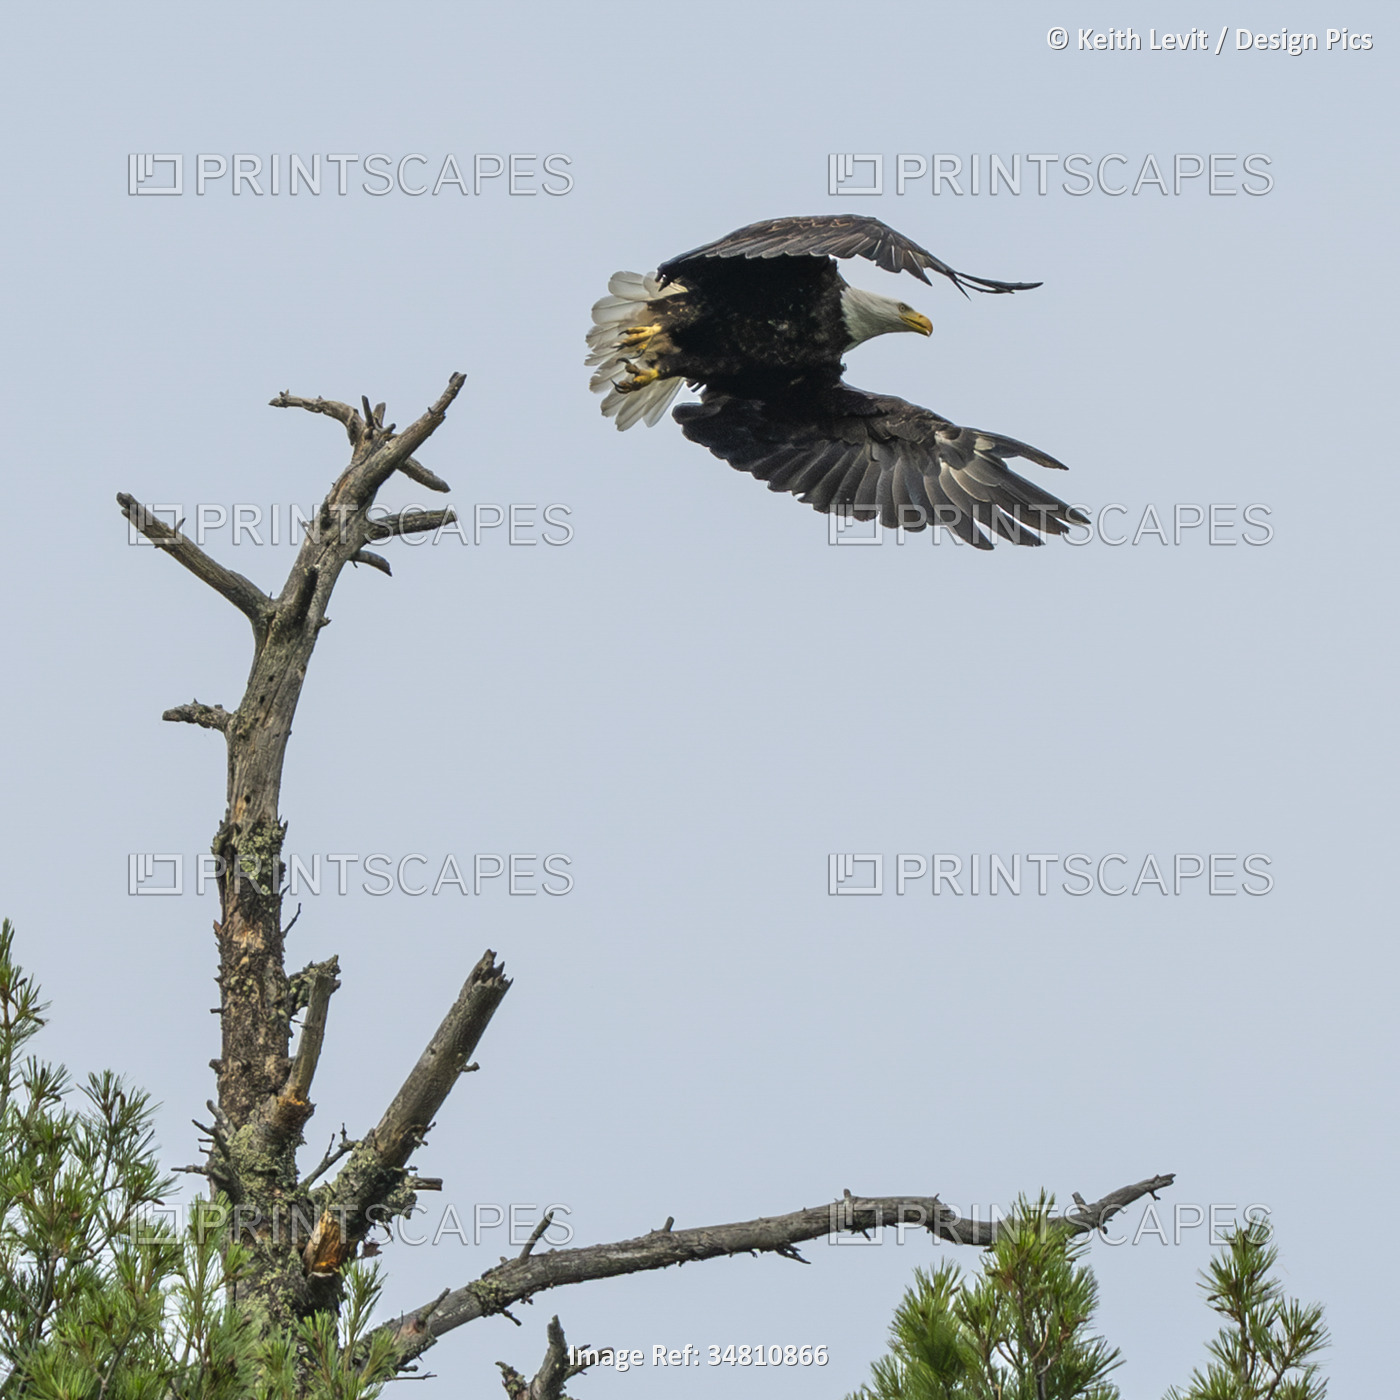 Bald eagle (Haliaeetus leucocephalus) taking flight from a treetop in a blue sky